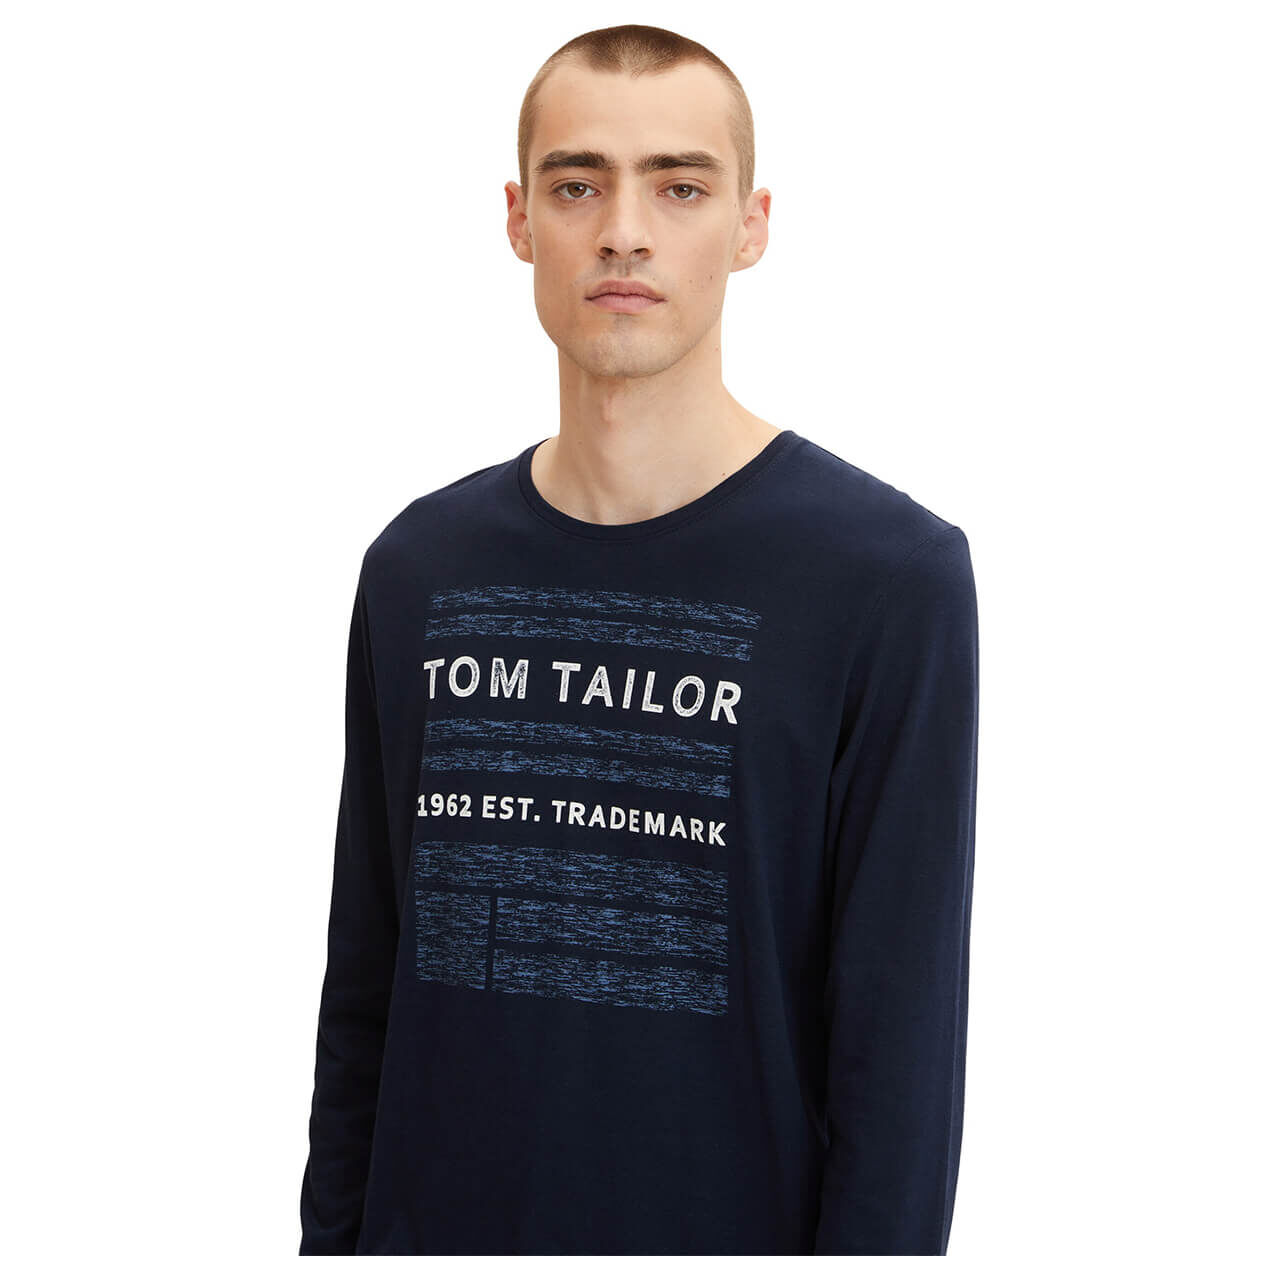 Tom Tailor Herren Langarm Shirt sky blue print